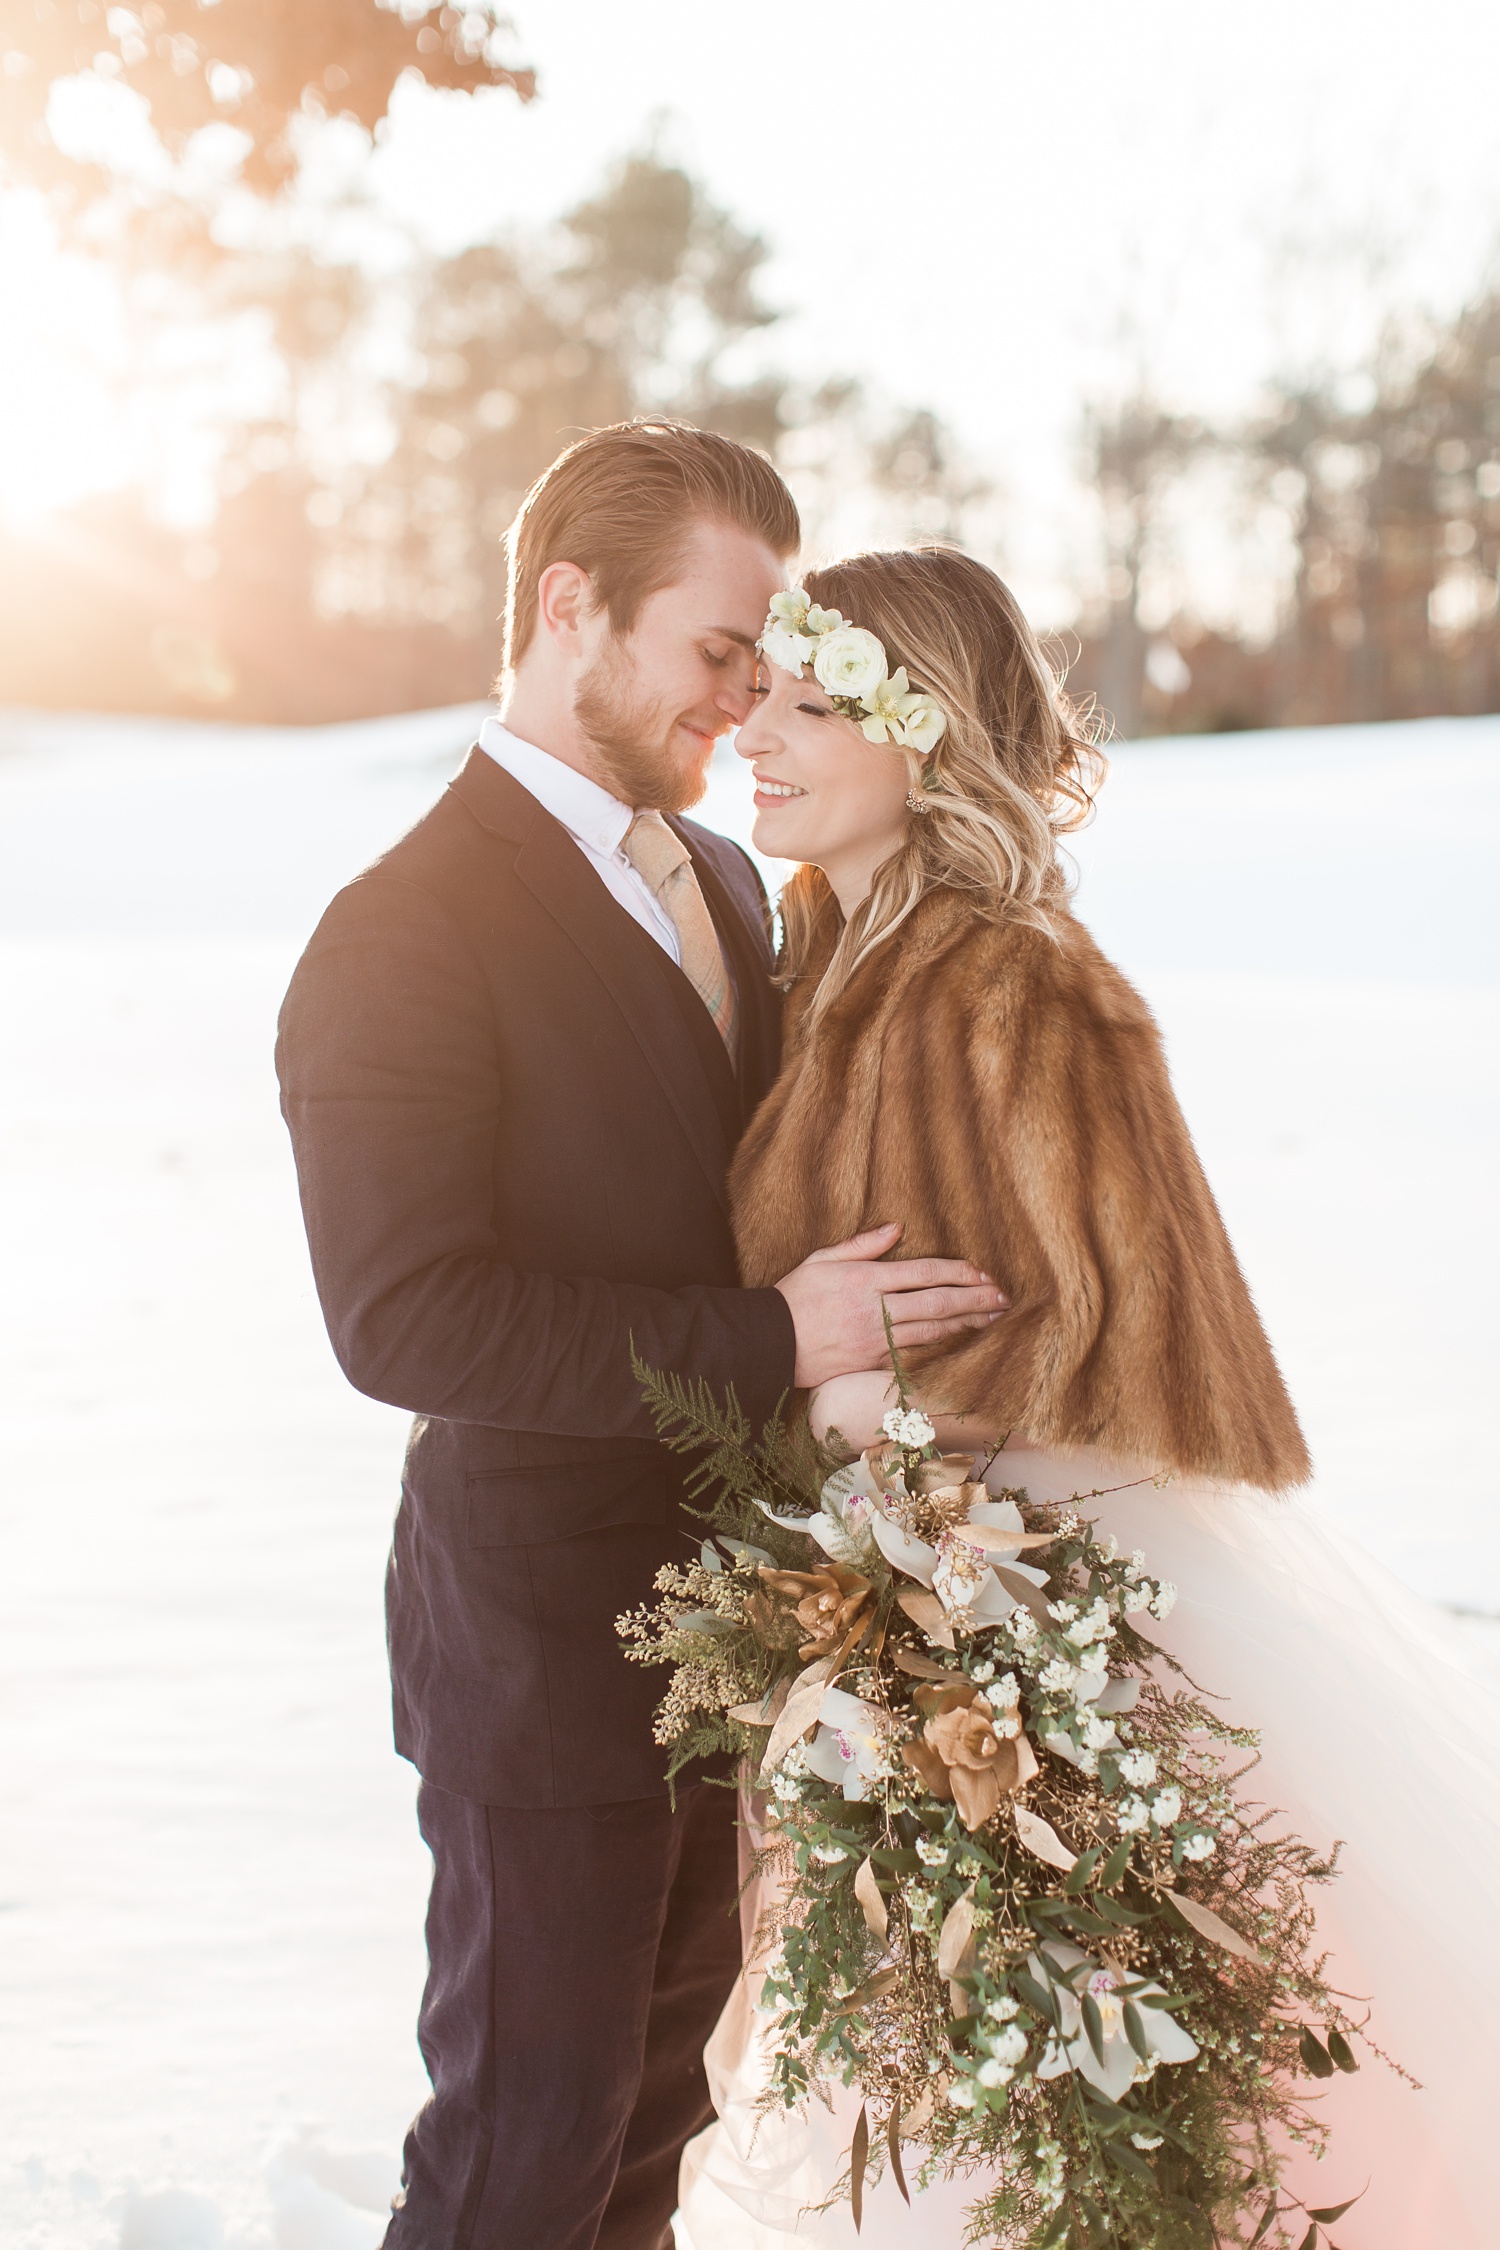 South Jersey Wedding Photography | Winter Garden Wedding Inspiration | Running Deer Golf Club Wedding Photography